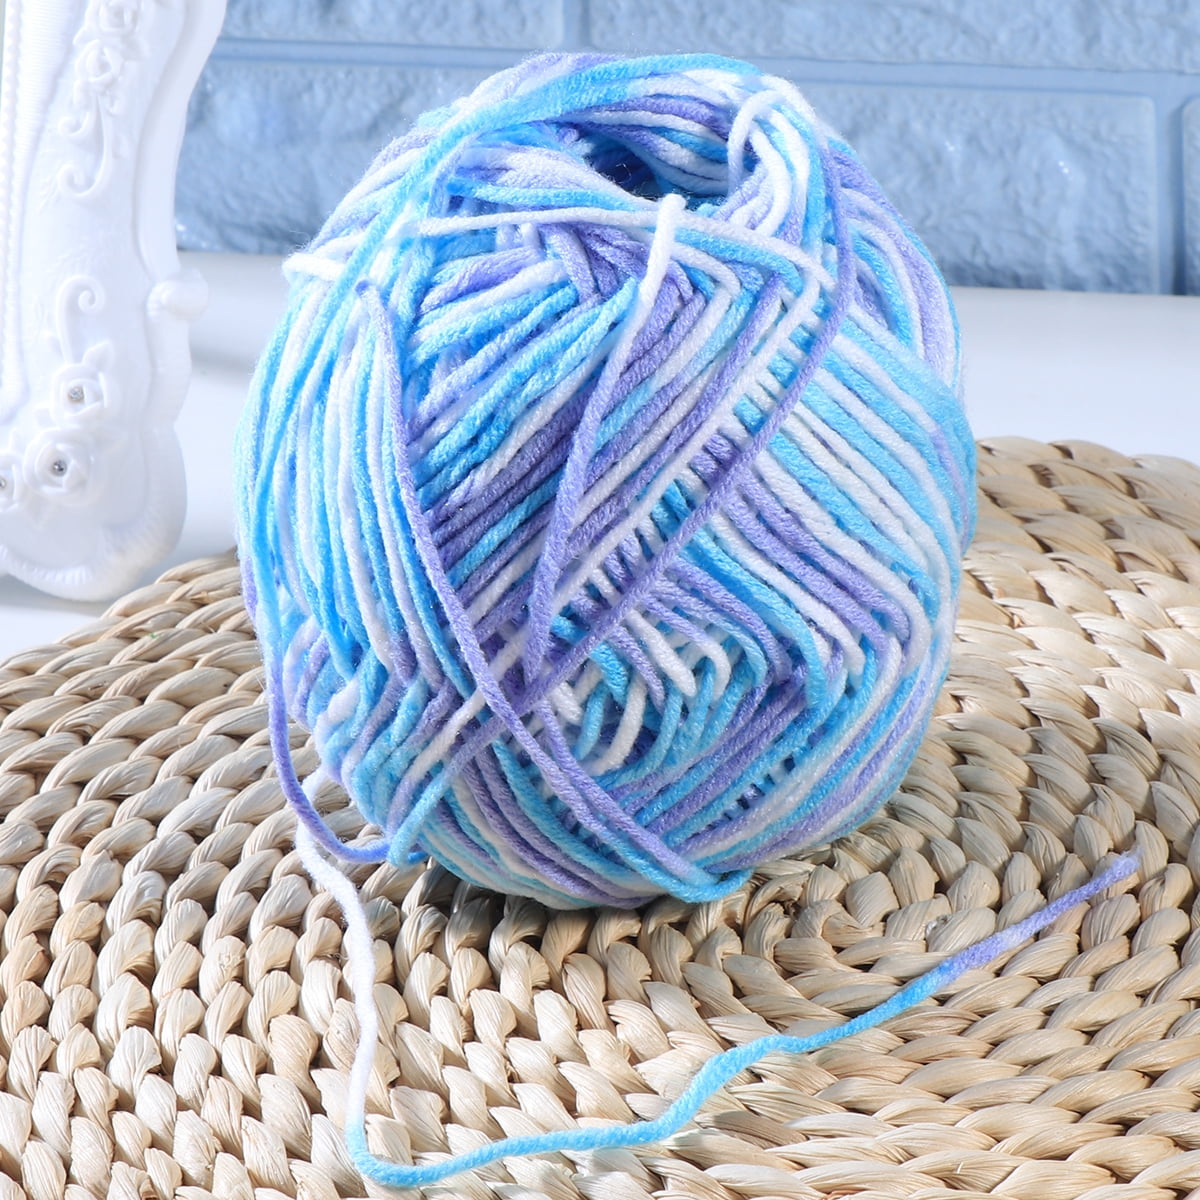 Uheoun Bulk Yarn Clearance Sale for Crocheting, 1PC 50g Chunky Colorful  Hand Knitting Baby Milk Cotton Crochet Knitwear Wool B 